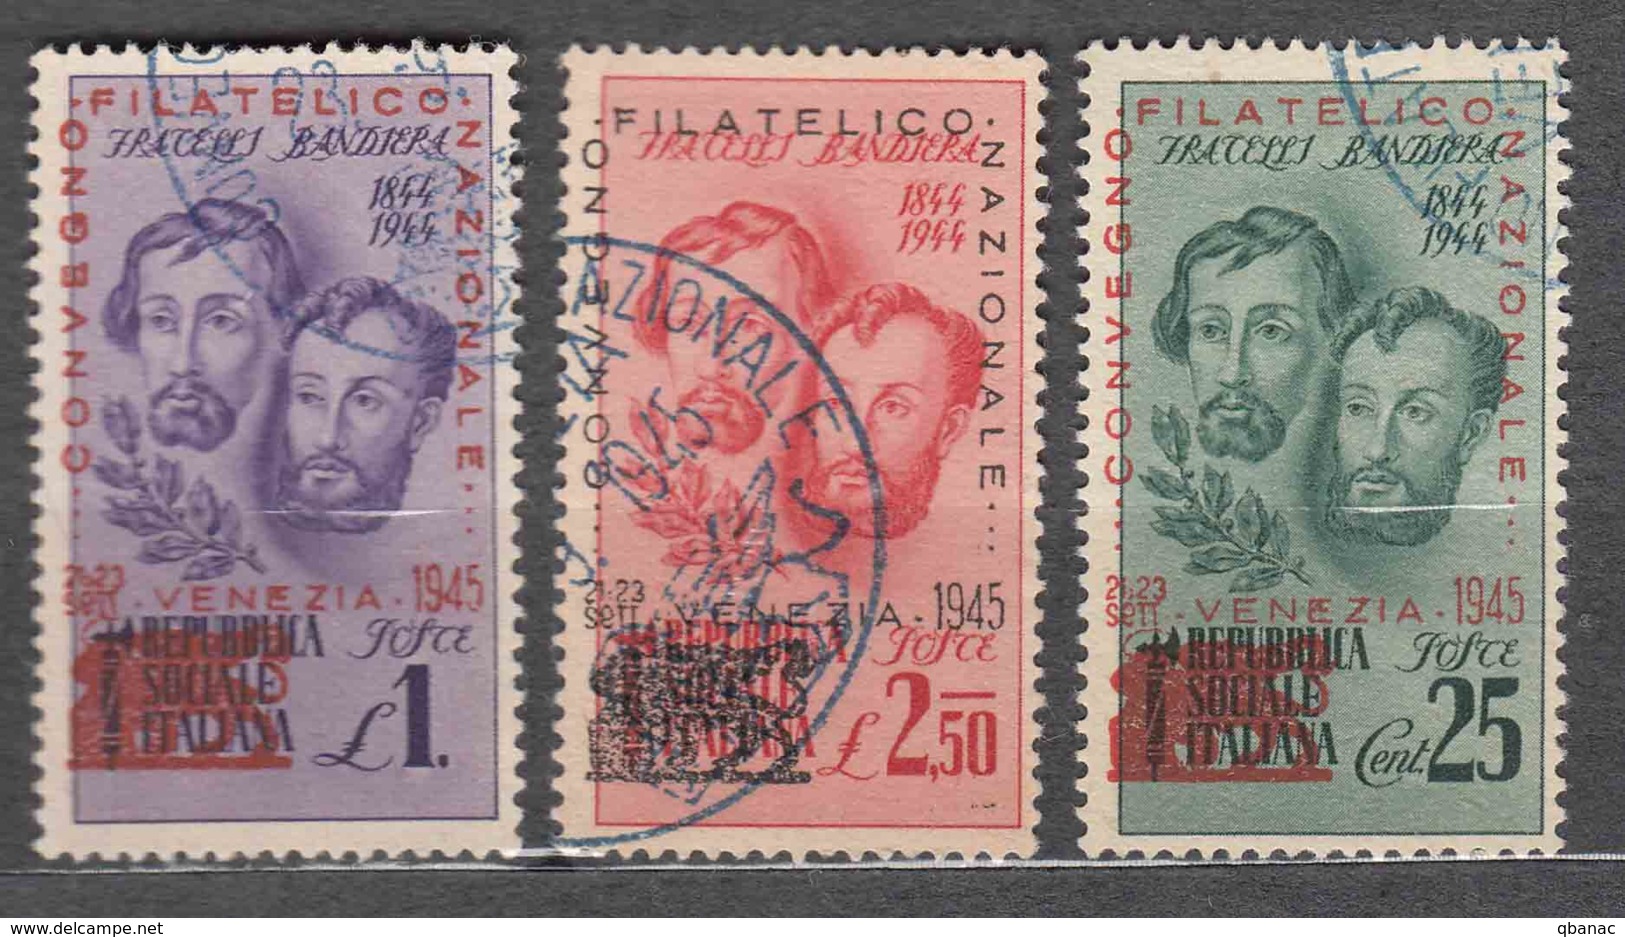 Italy 1945, Philatelic Exibition Venezia Stamps Overprint, Fratelli Bandiera, Used - Usati